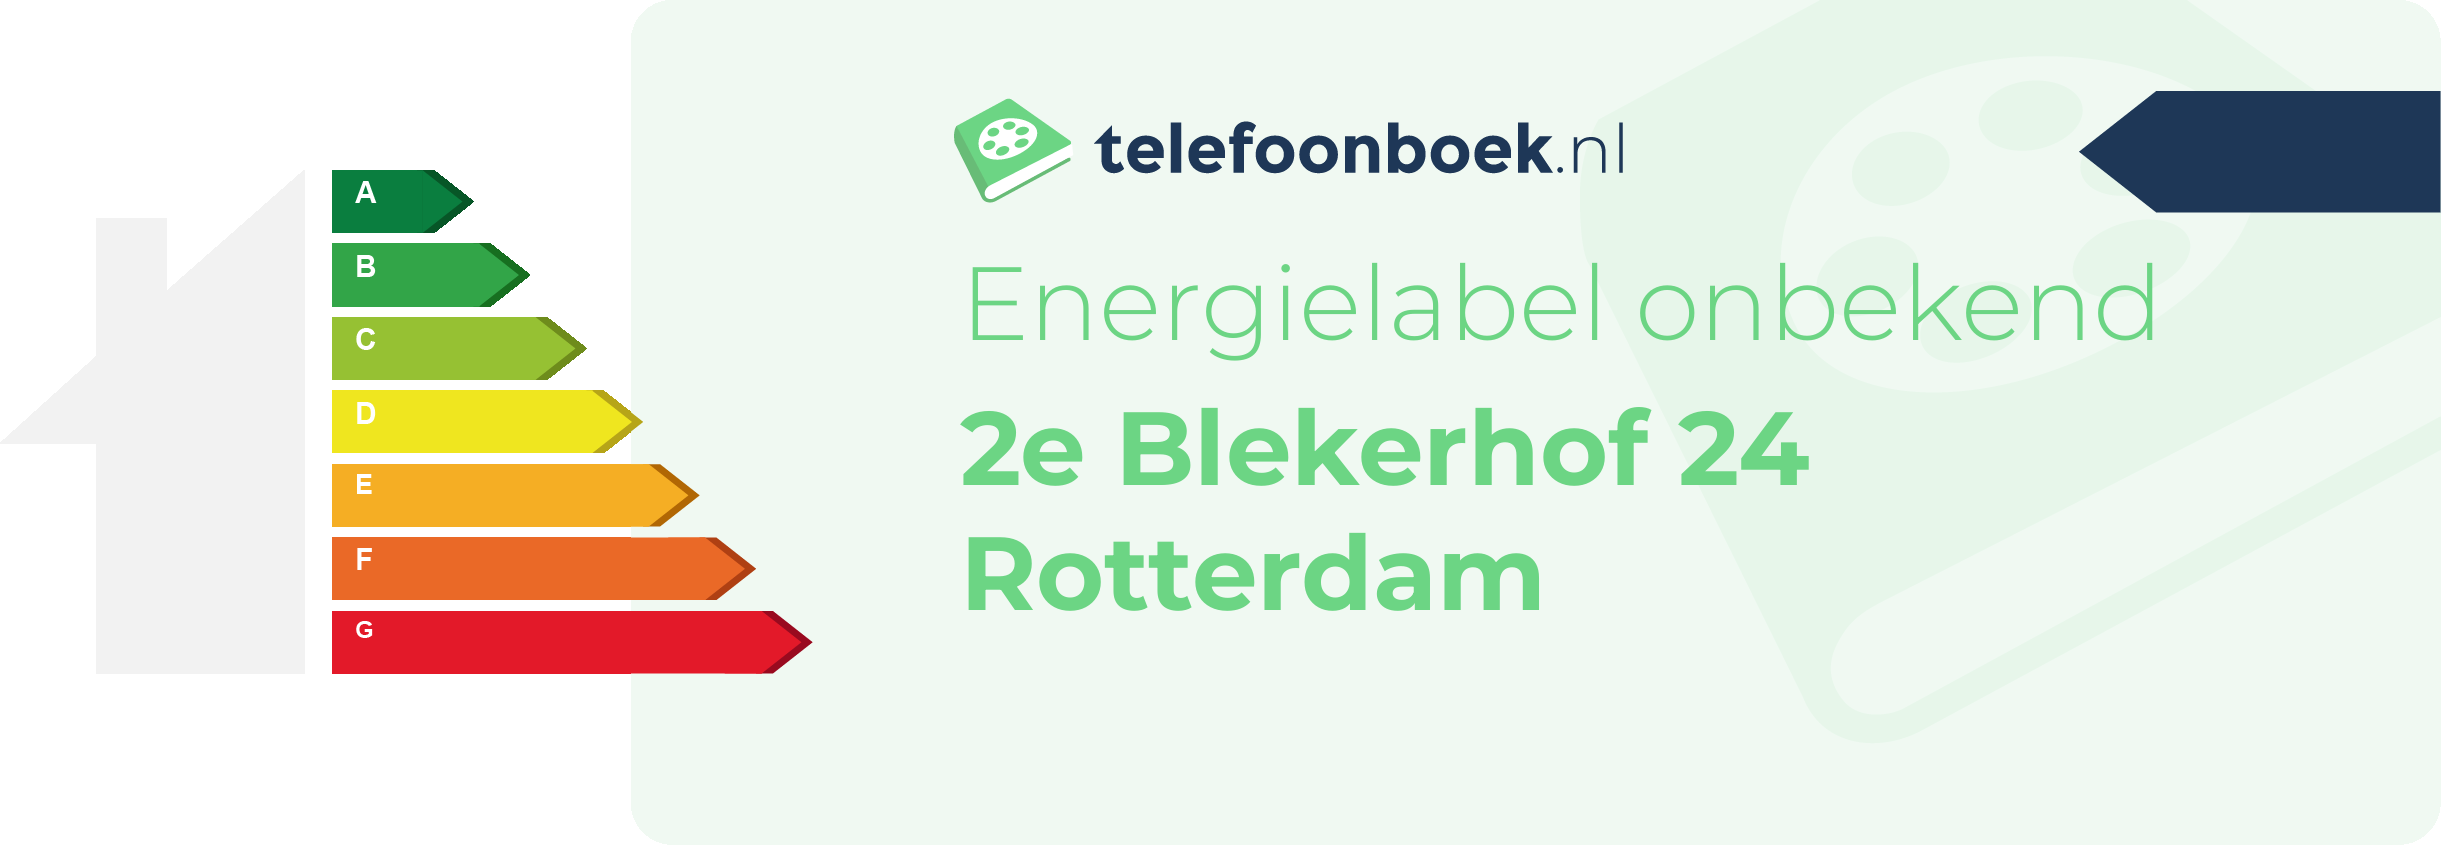 Energielabel 2e Blekerhof 24 Rotterdam